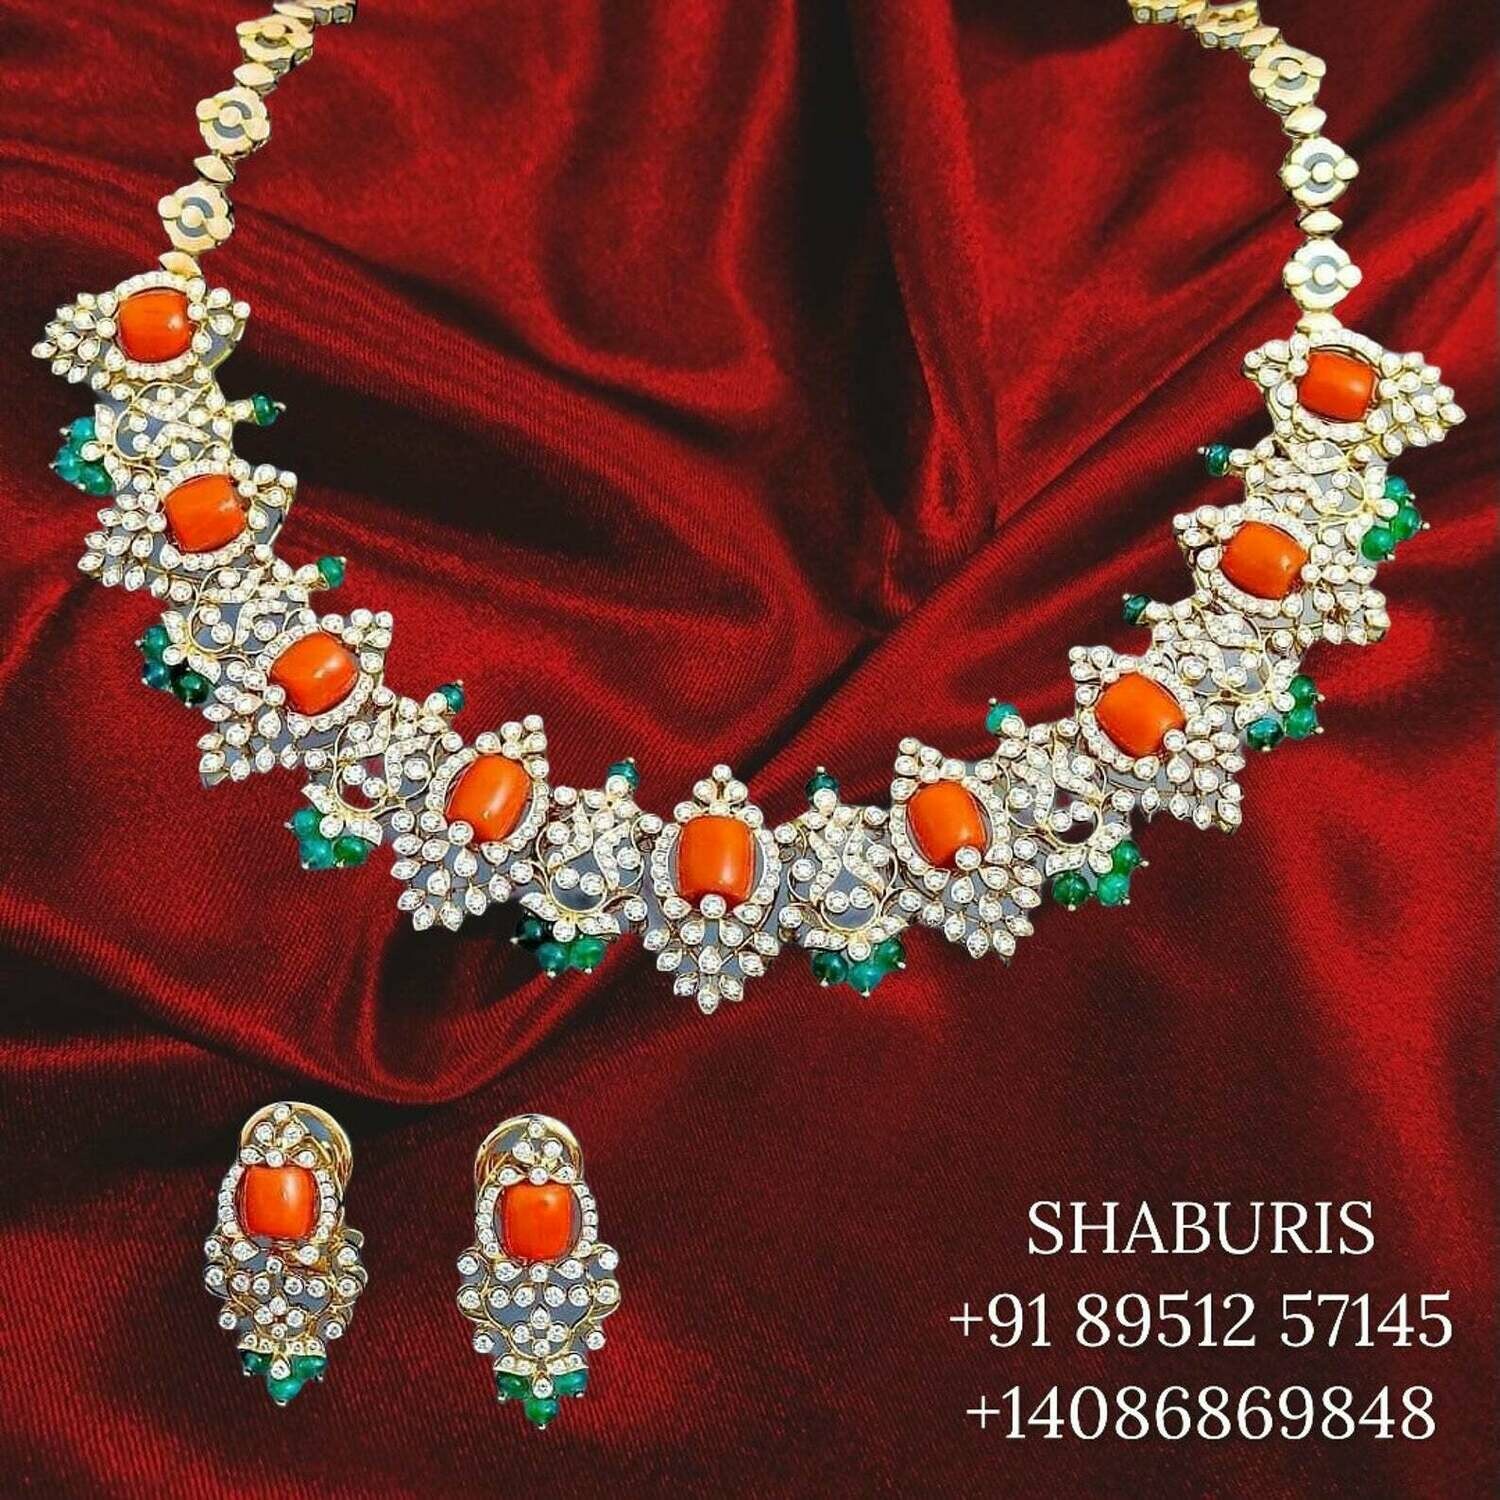 Coral mala bead jewelry gemstone jewelry polki diamond emerald necklace pure silver jewelry south indian gold jewelry sets -SHABURIS